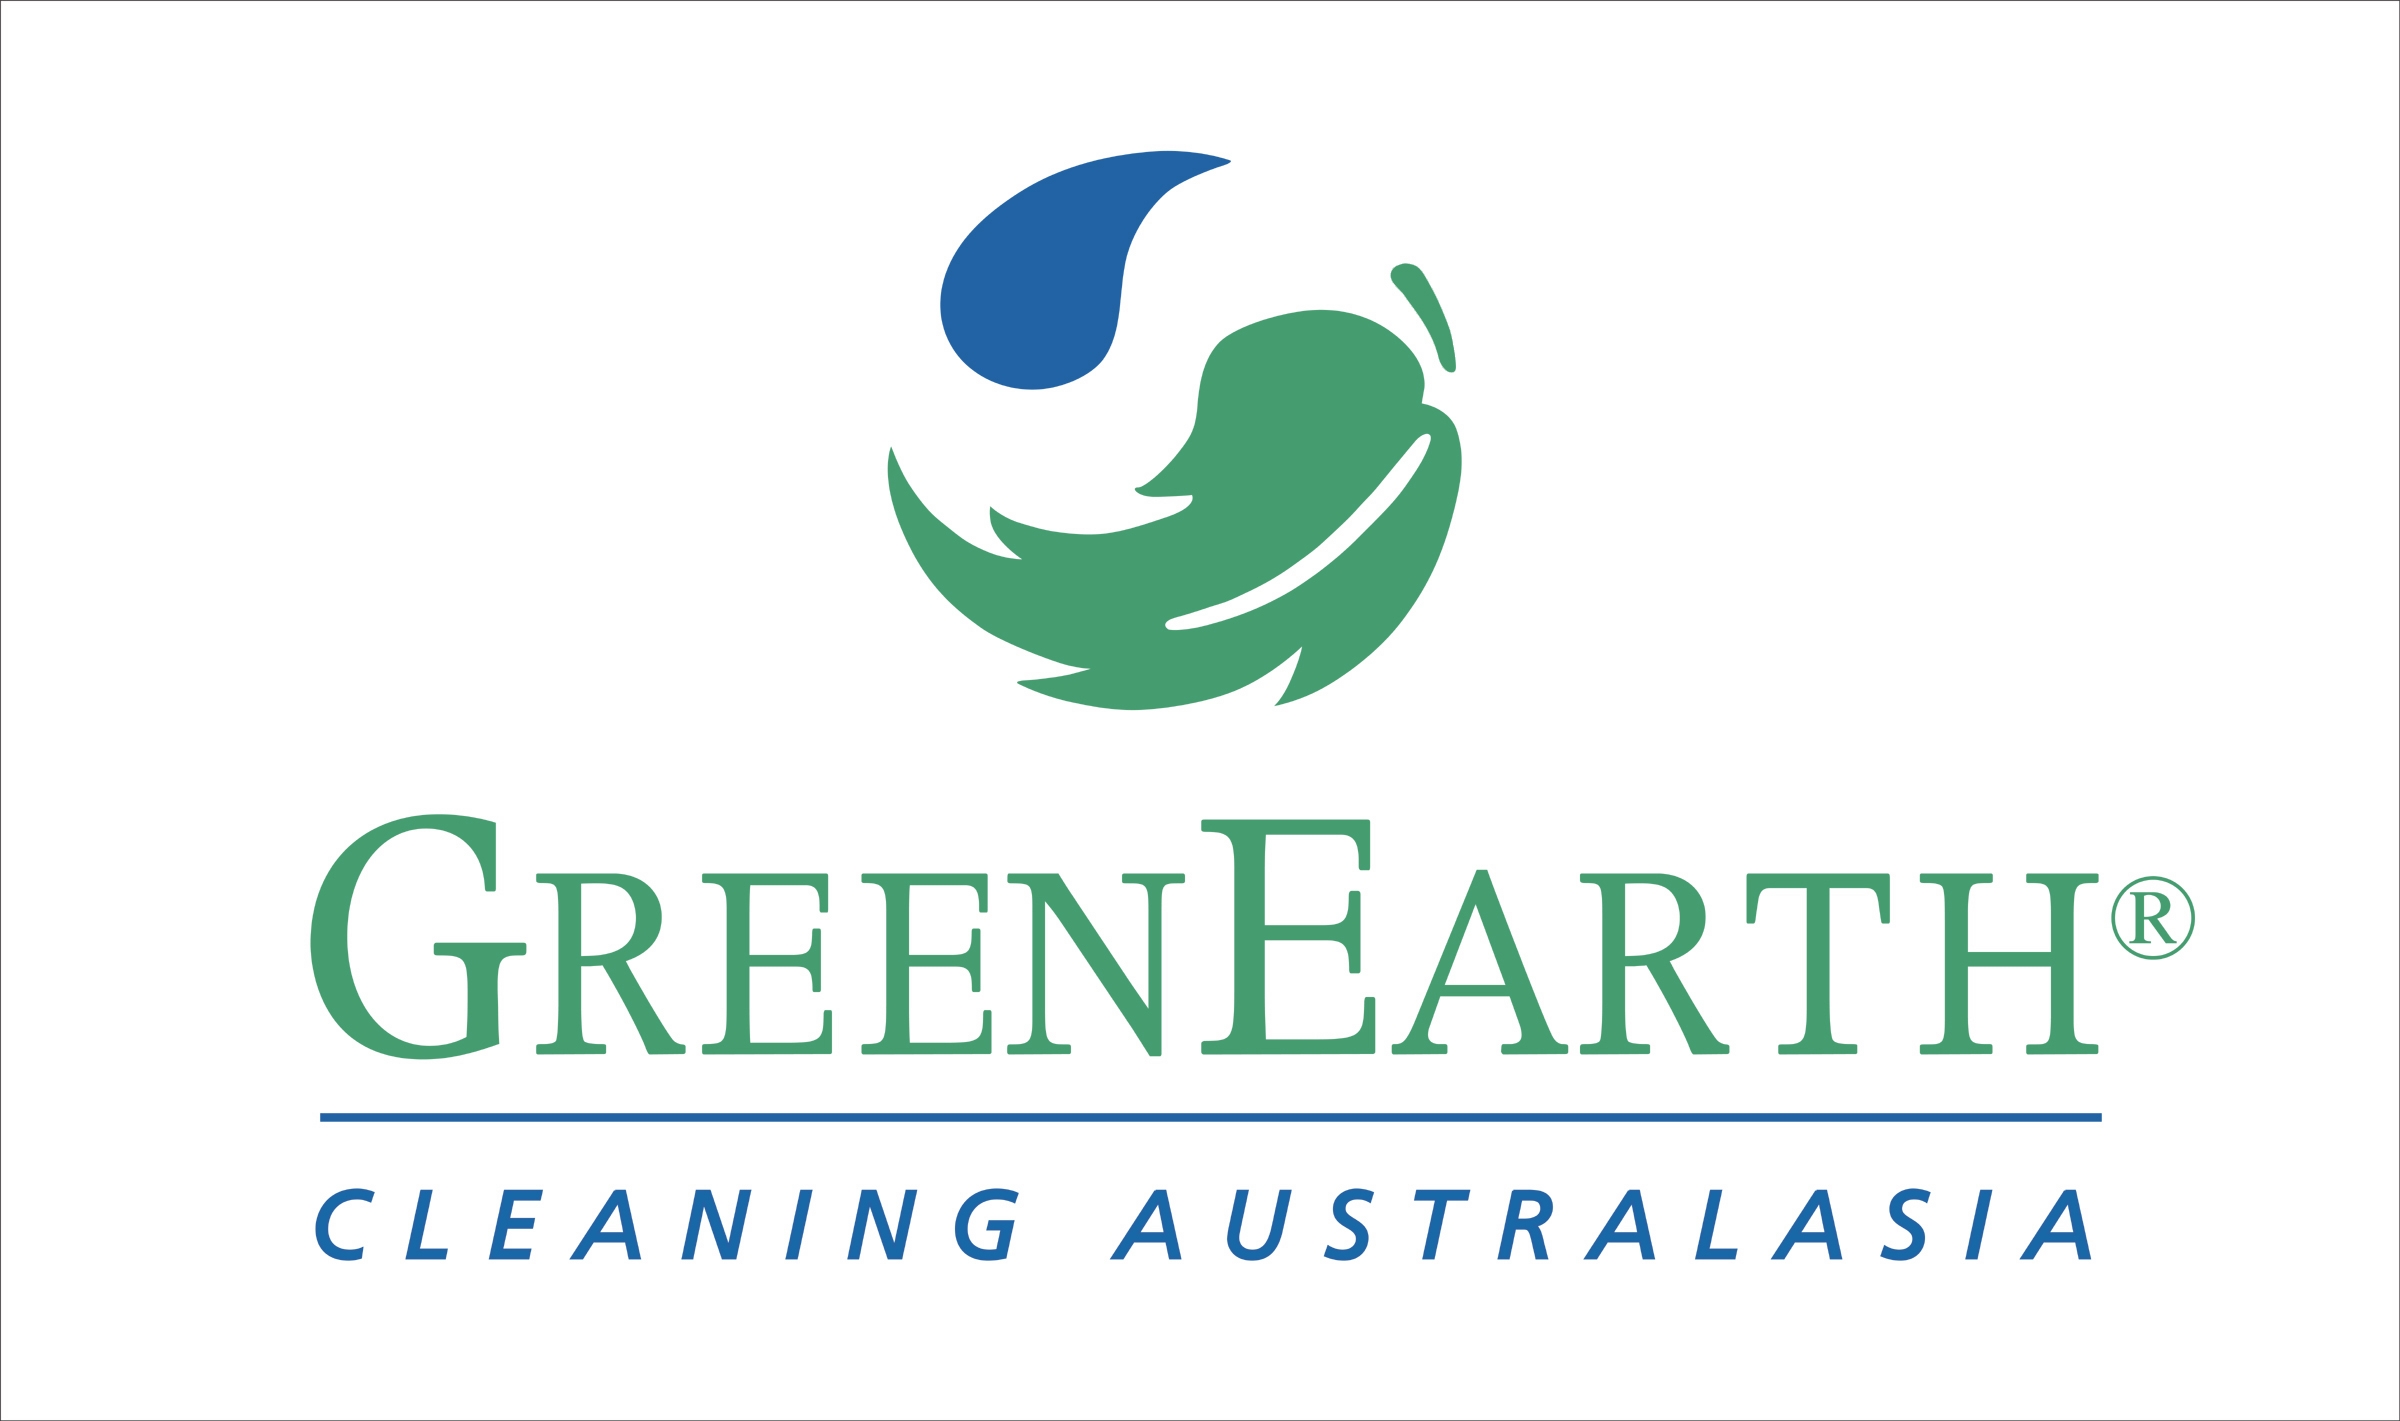 GreenEarth Cleaning Australasia